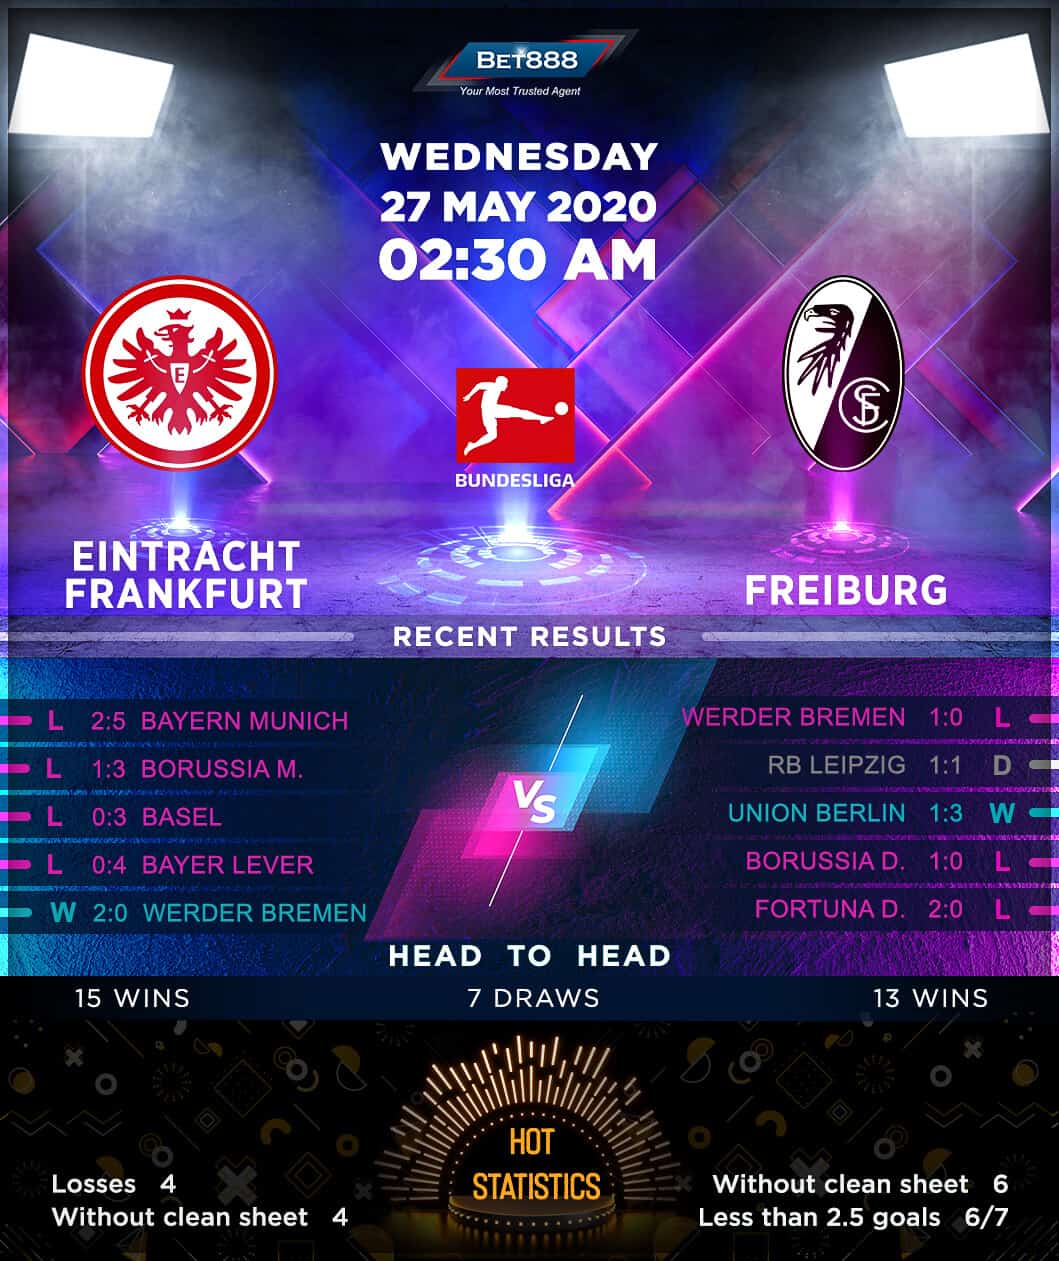 Eintracht Frankfurt vs Freiburg﻿ 27/05/20